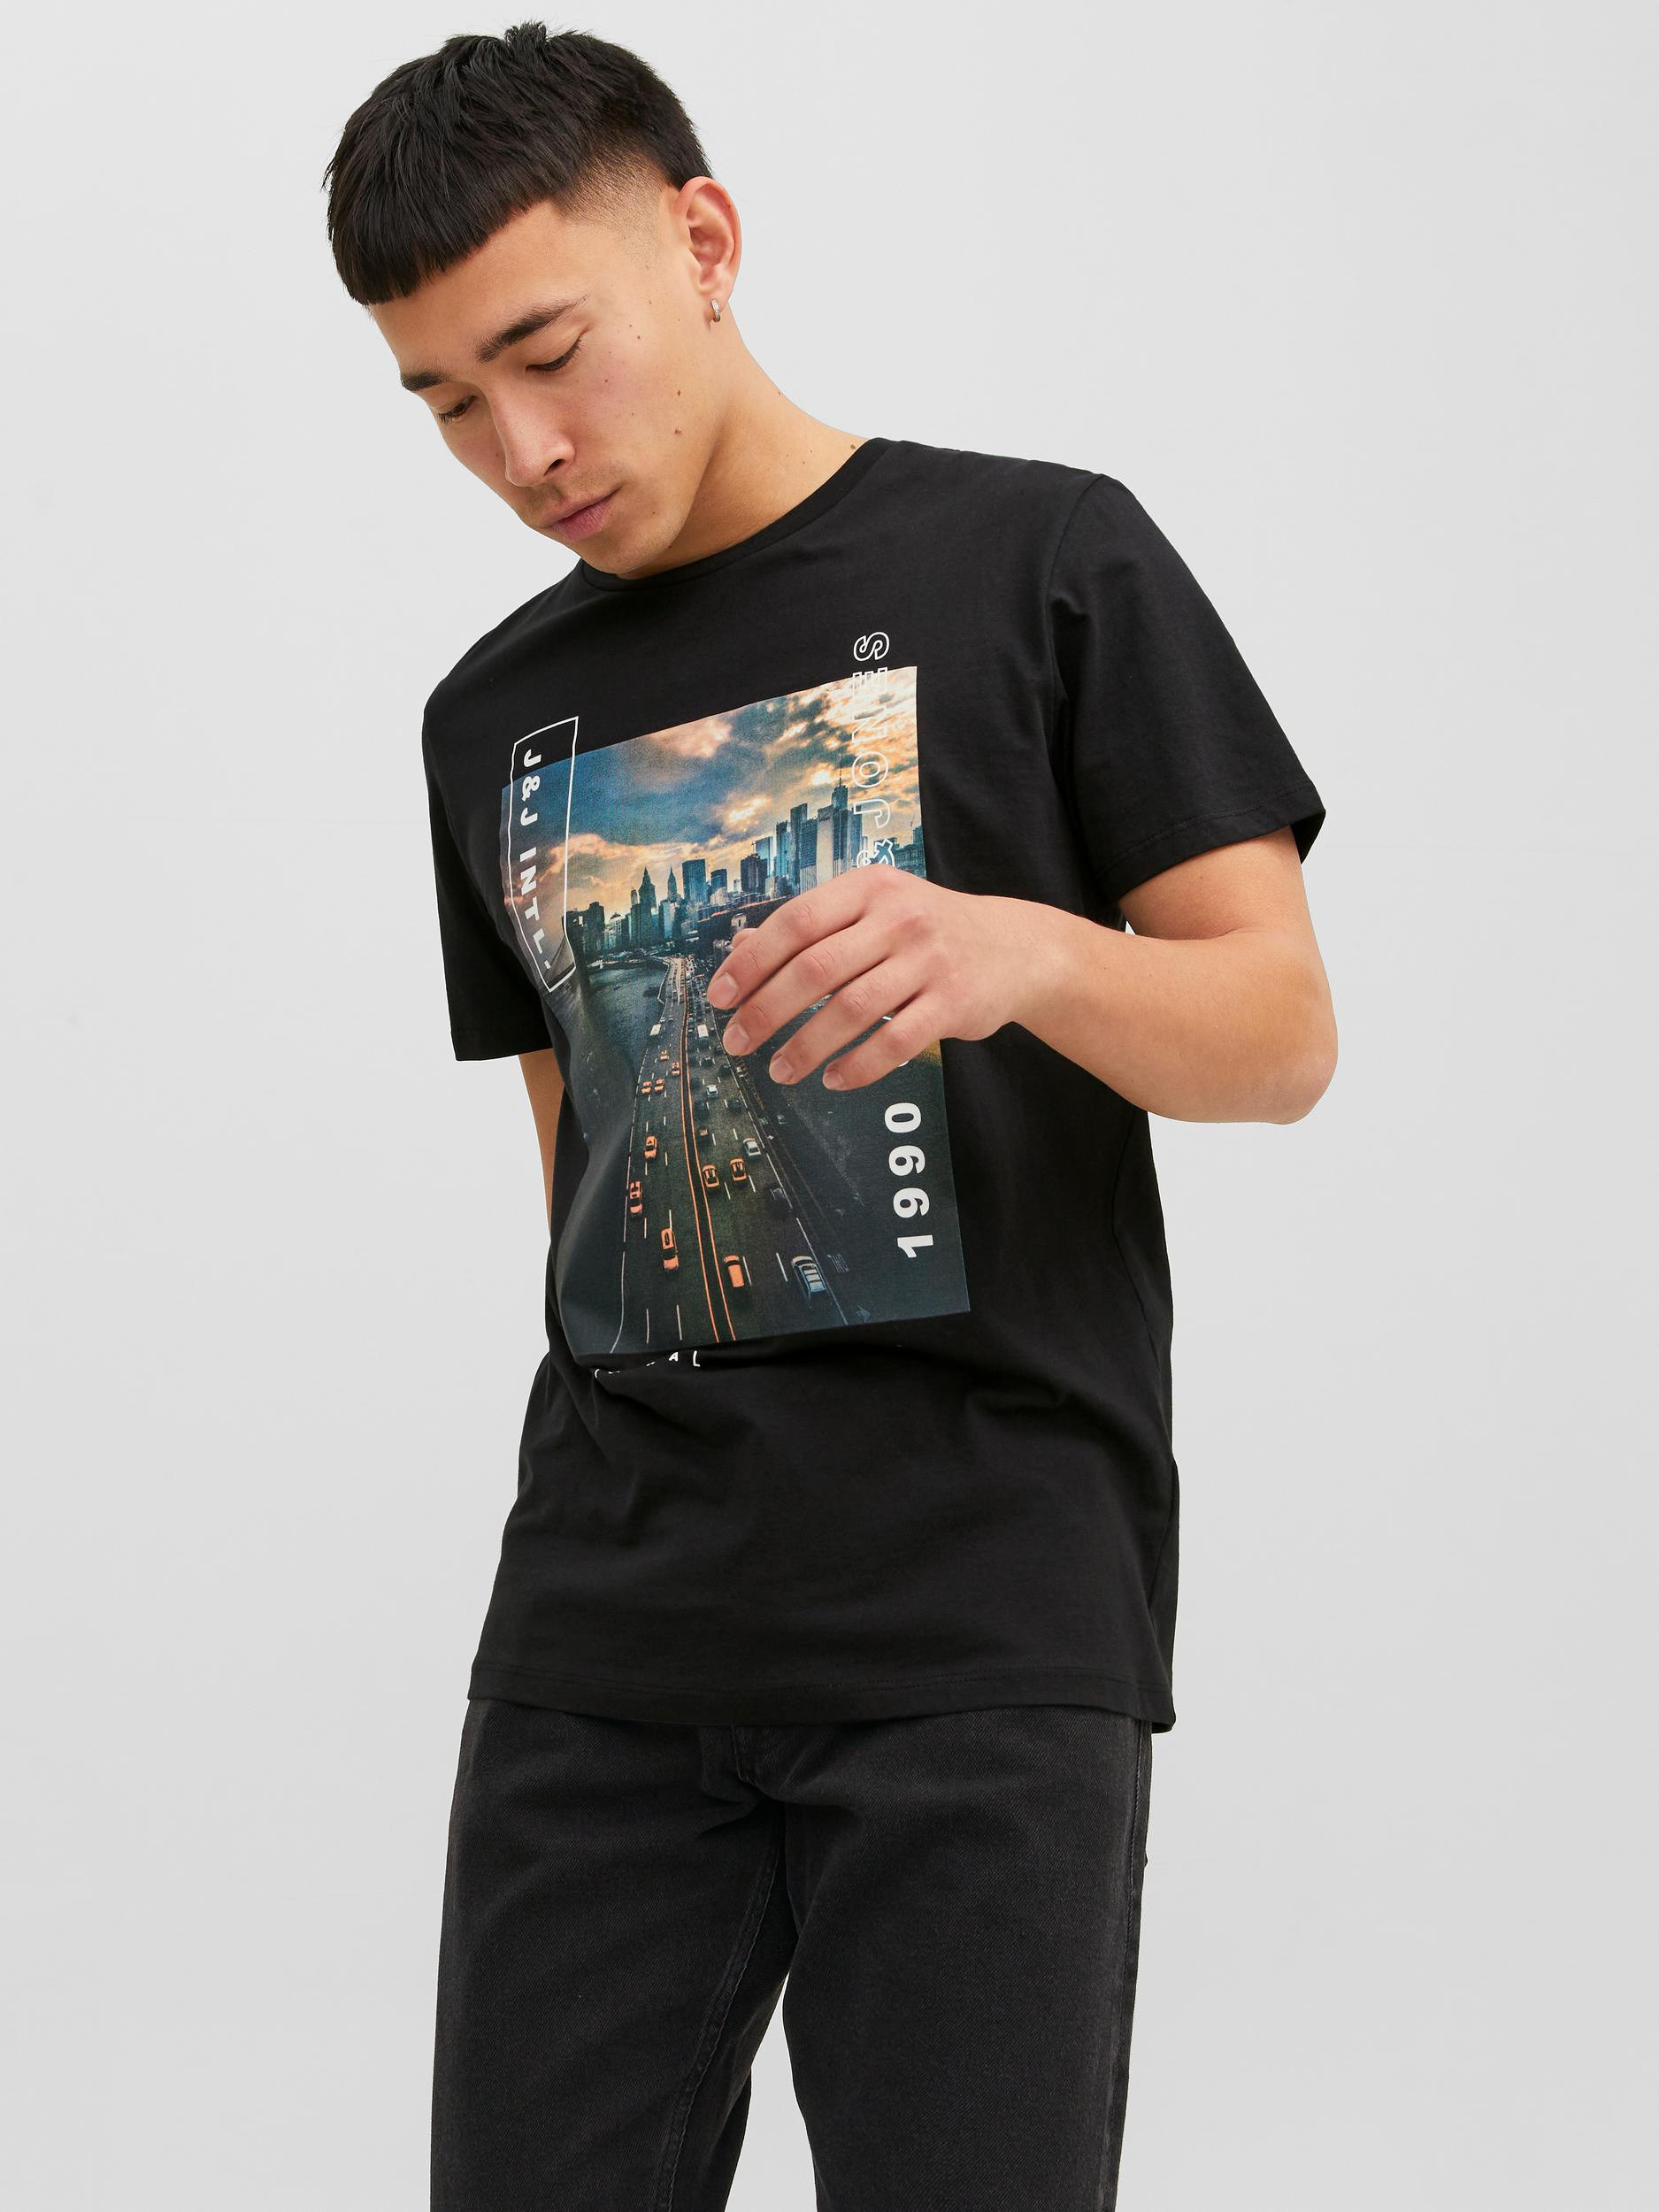 Jack & Jones -Cotton T-shirt with print, Black, large image number 3